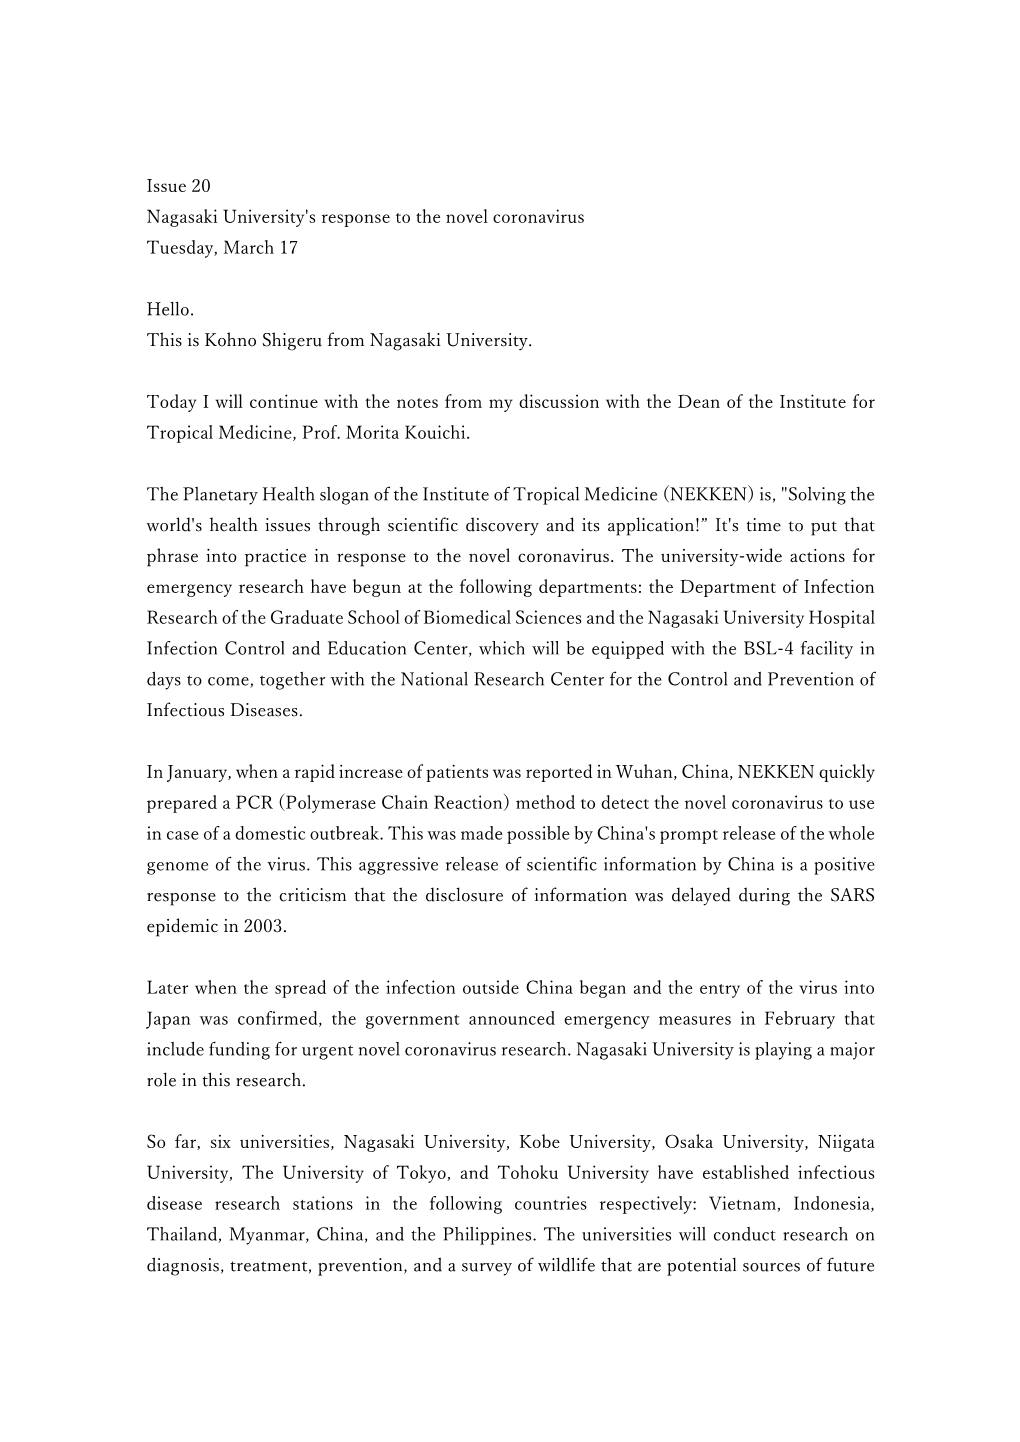 Issue 20 Nagasaki University's Response to the Novel Coronavirus Tuesday, March 17